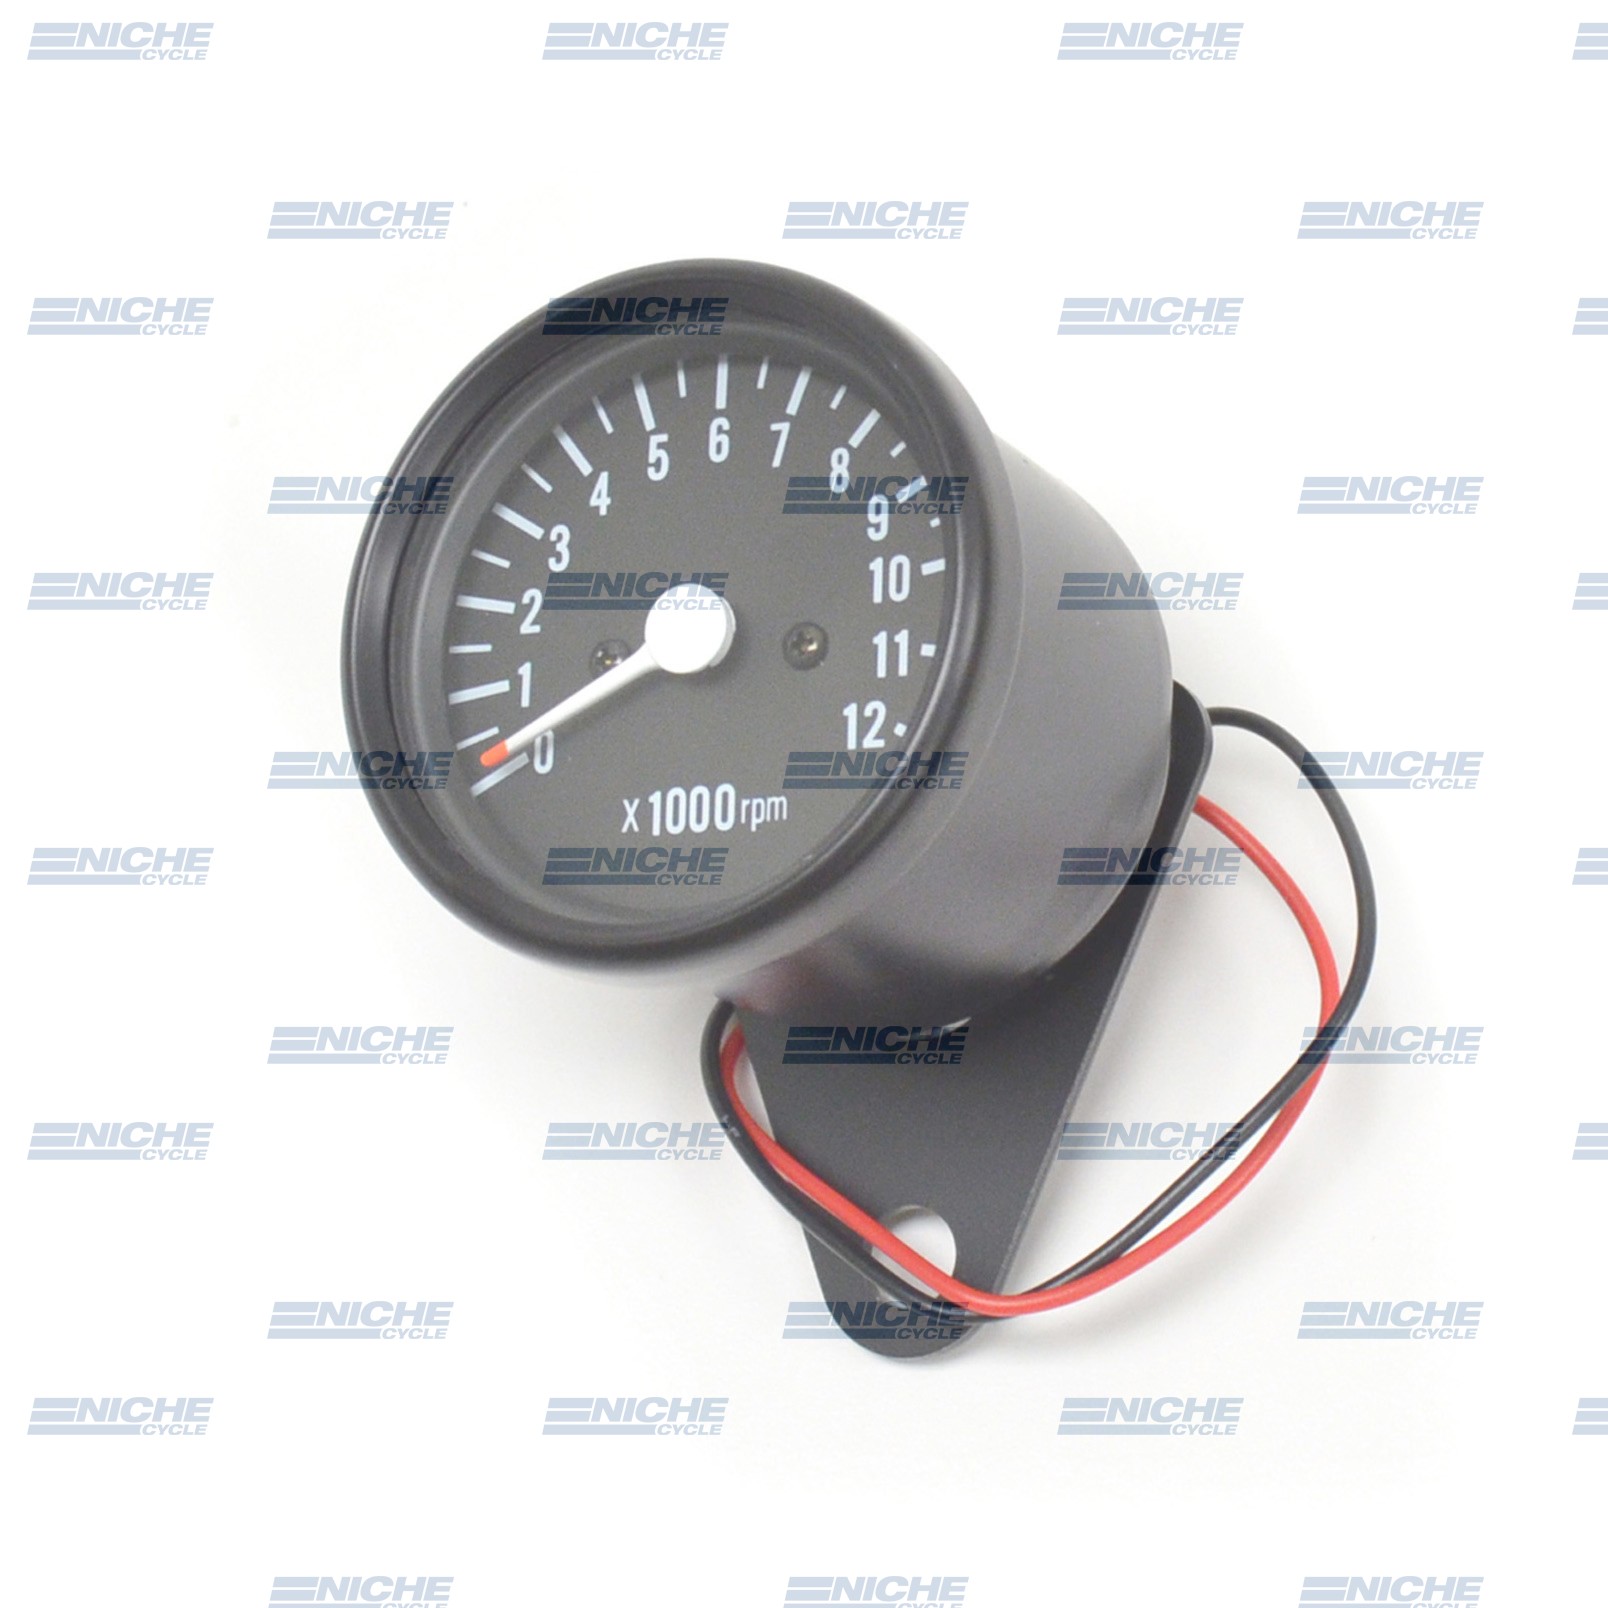 Mini Tachometer Gauge 12k RPM - 1:4 Ratio 58-43693B